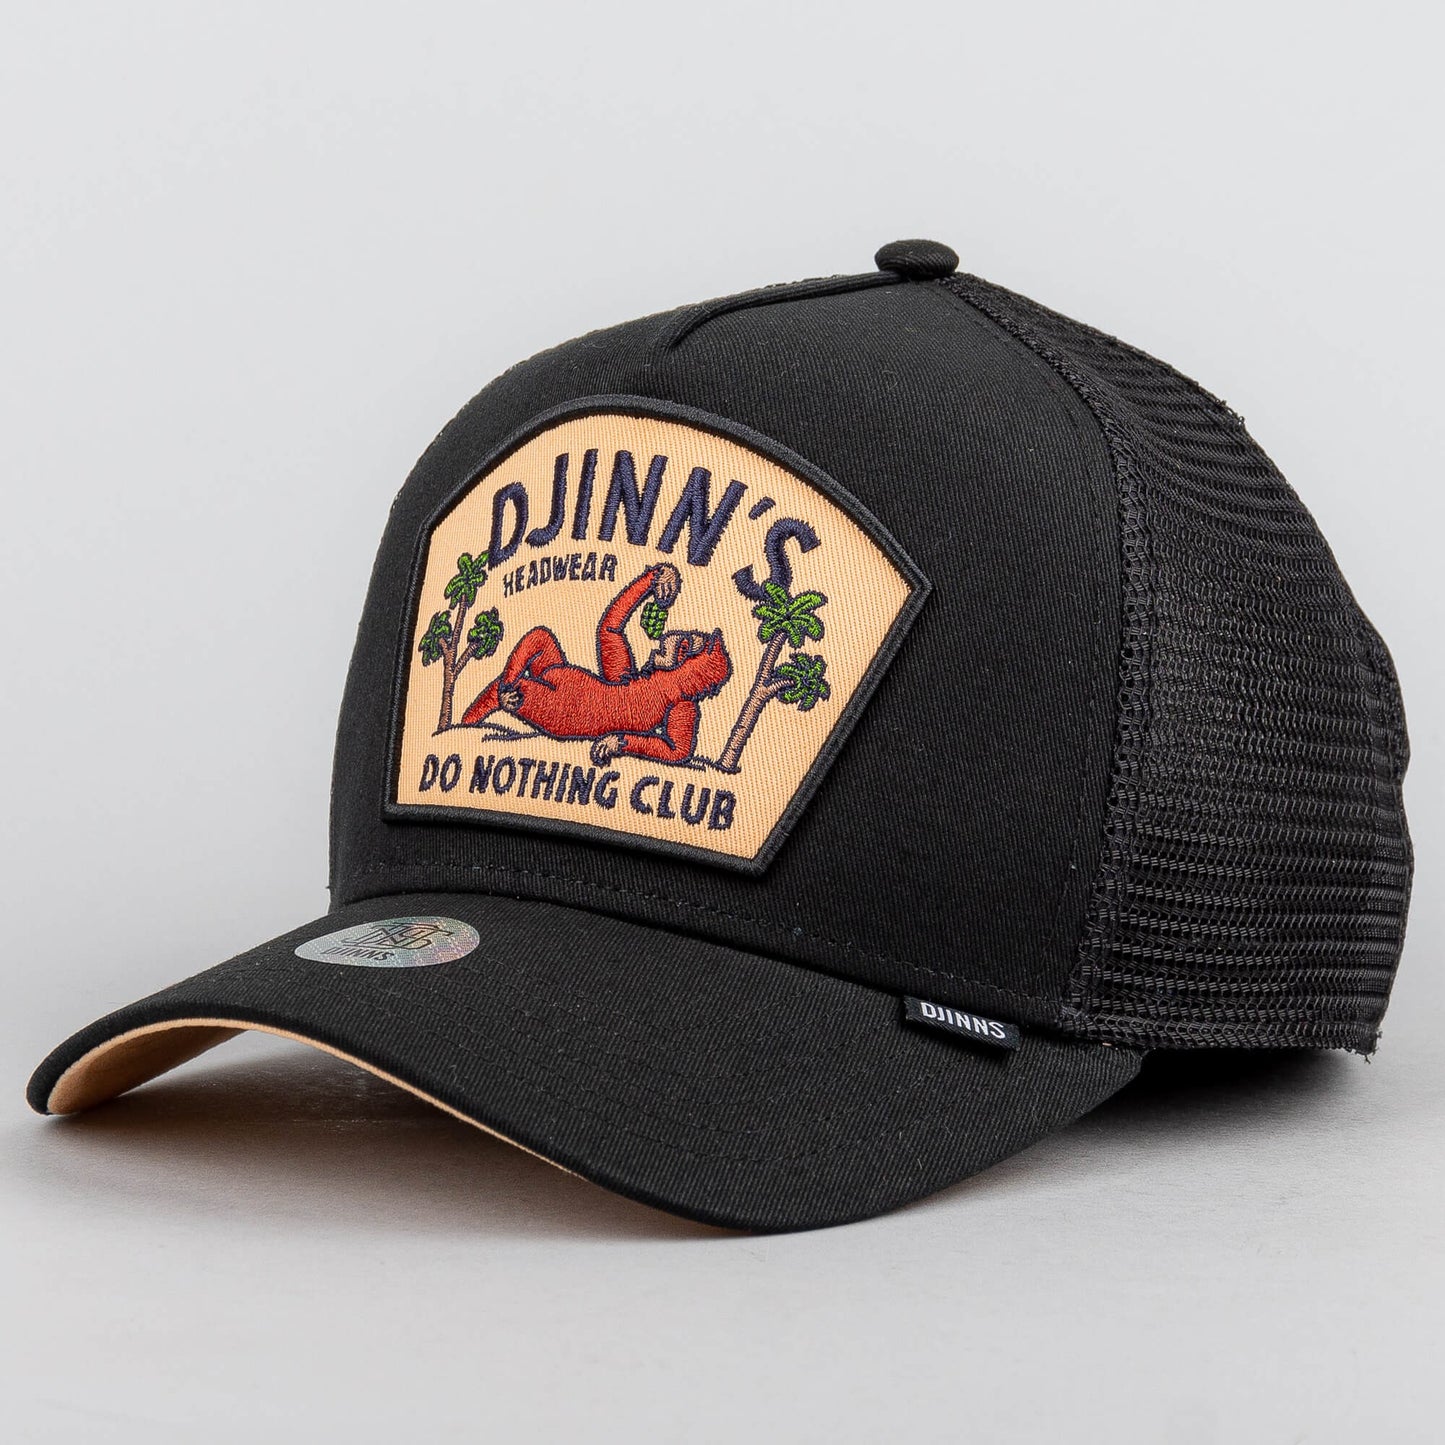 DJINN'S HFT Cap DNC Sloth black